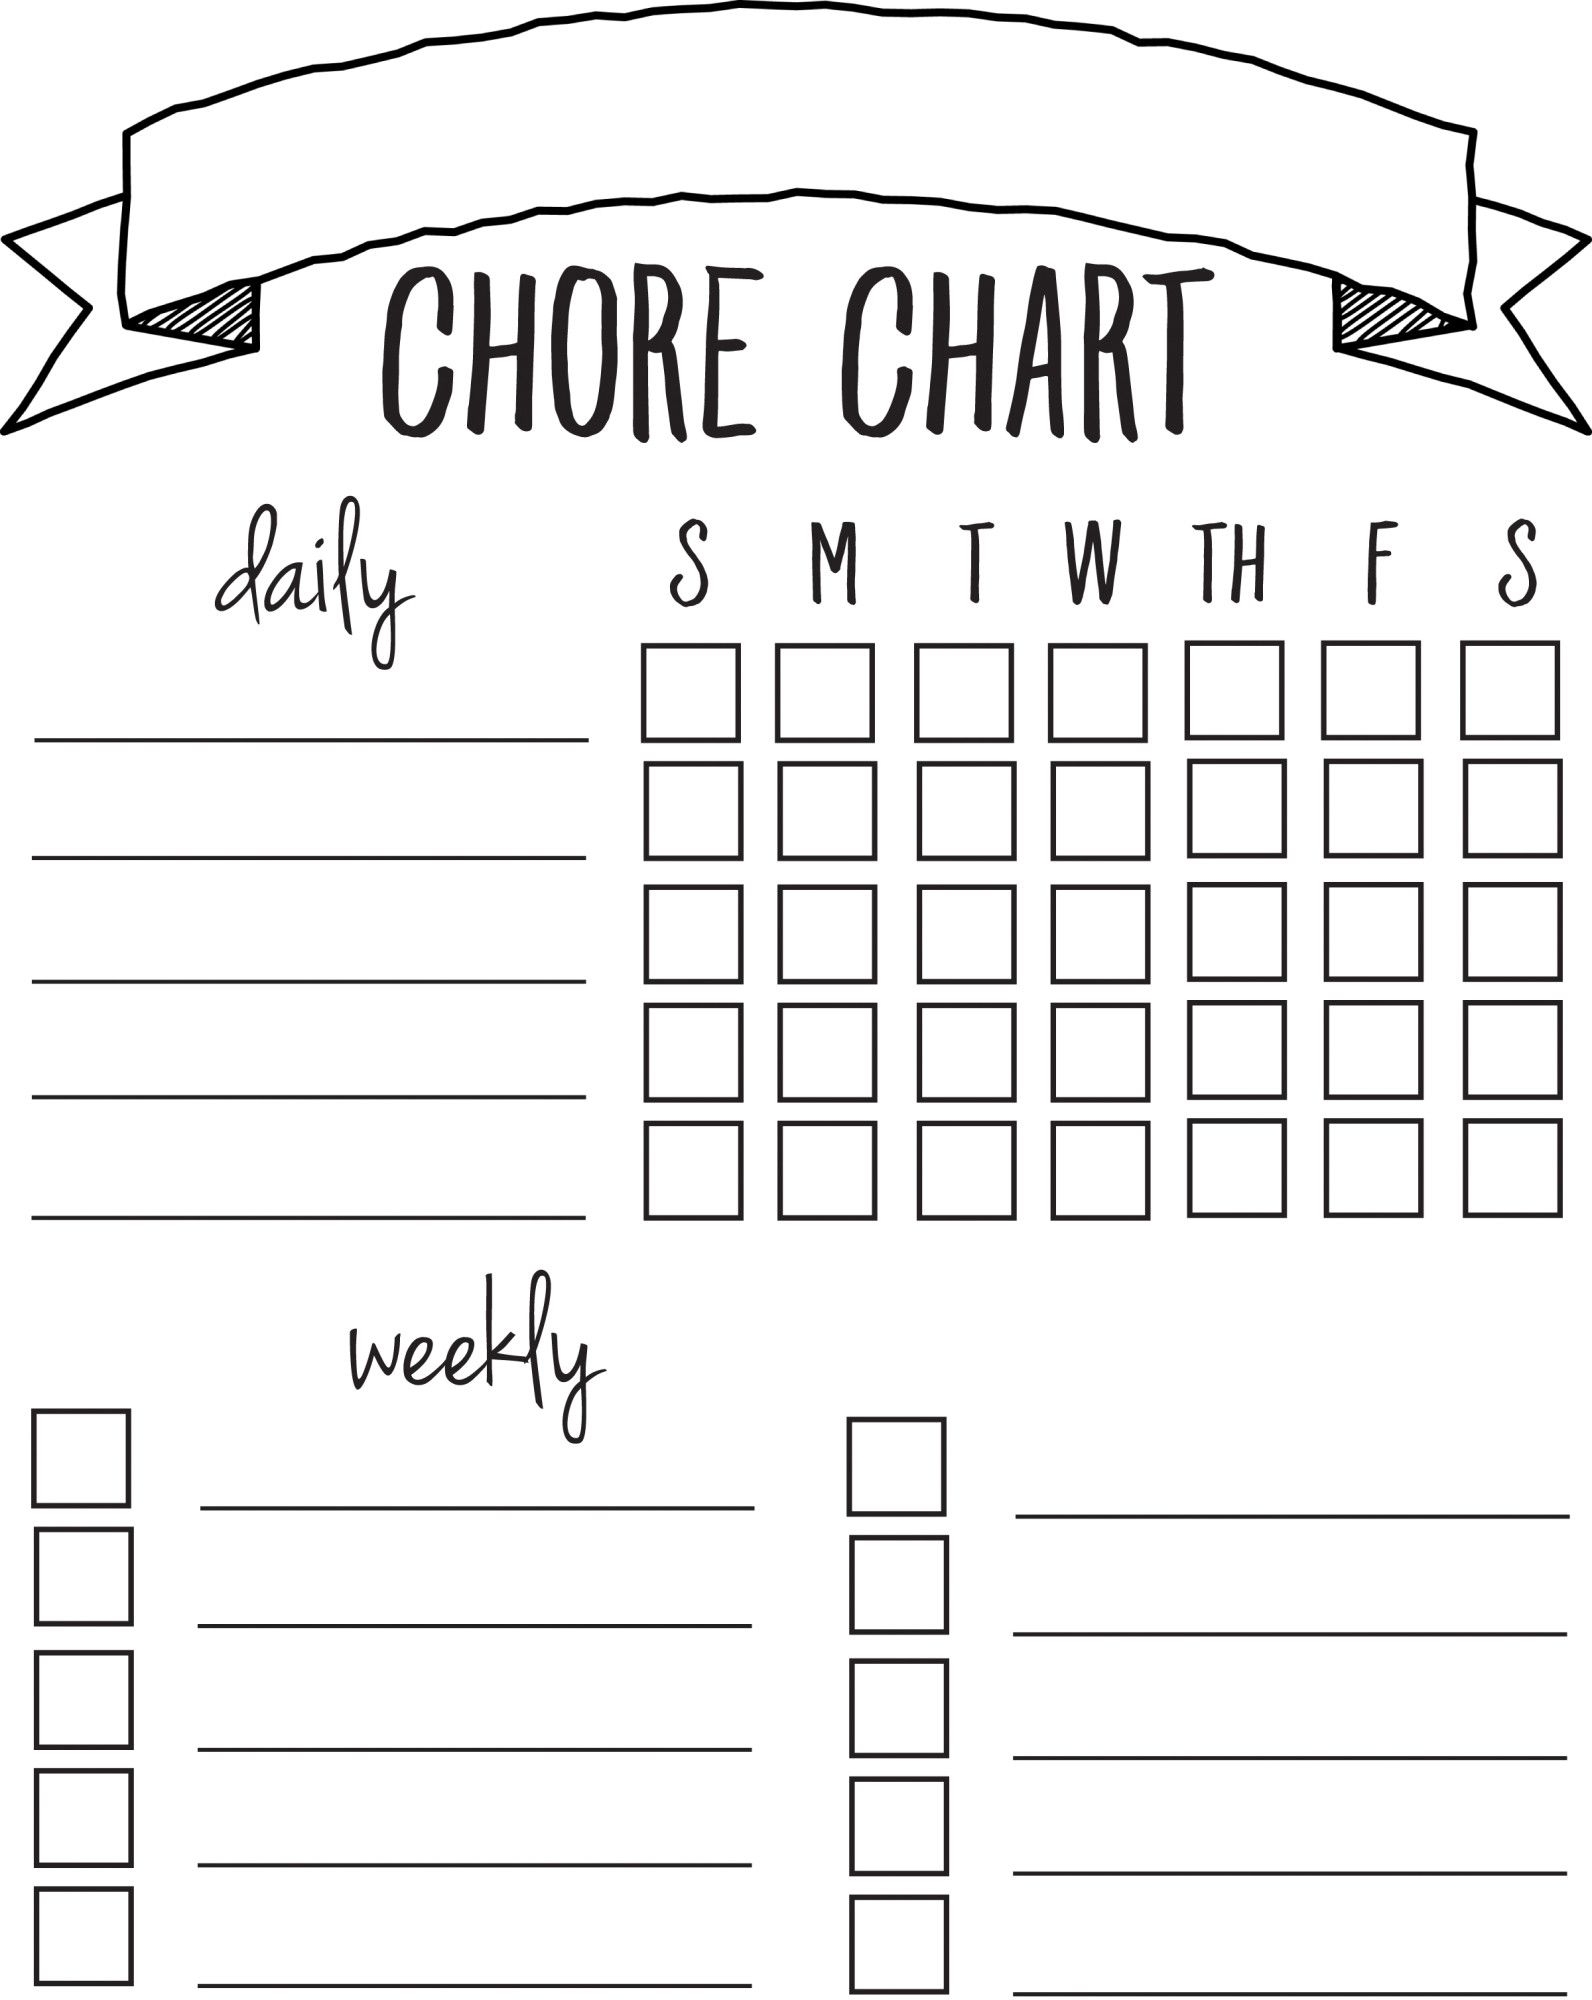 Free Printable Chore Chart Template